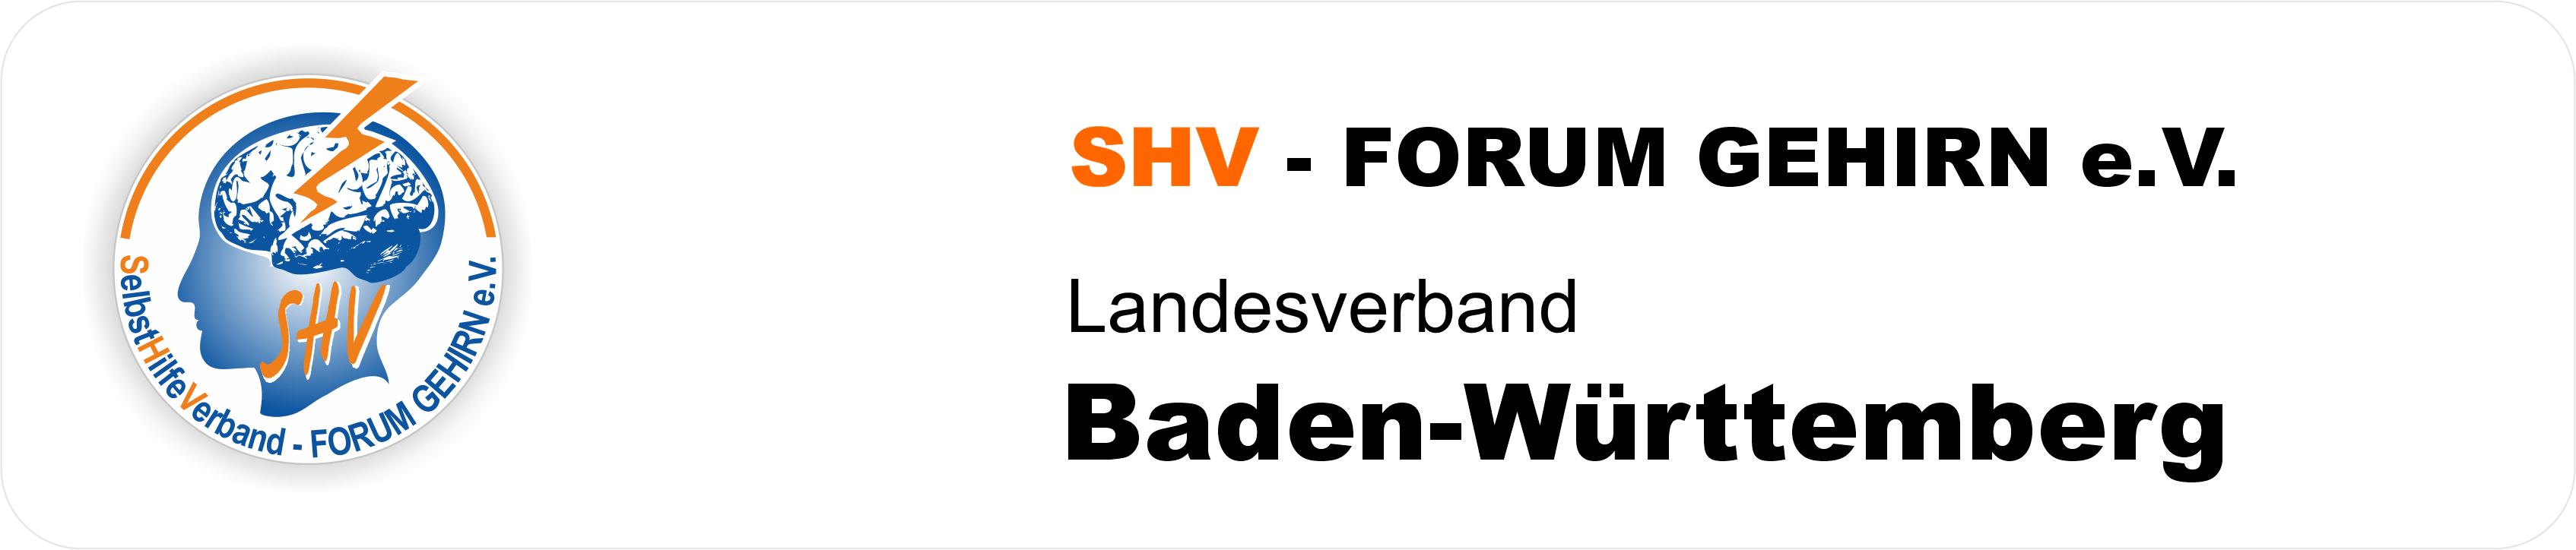 SHV - FORUM GEHIRN e.V. Landesverband Baden-Württemberg